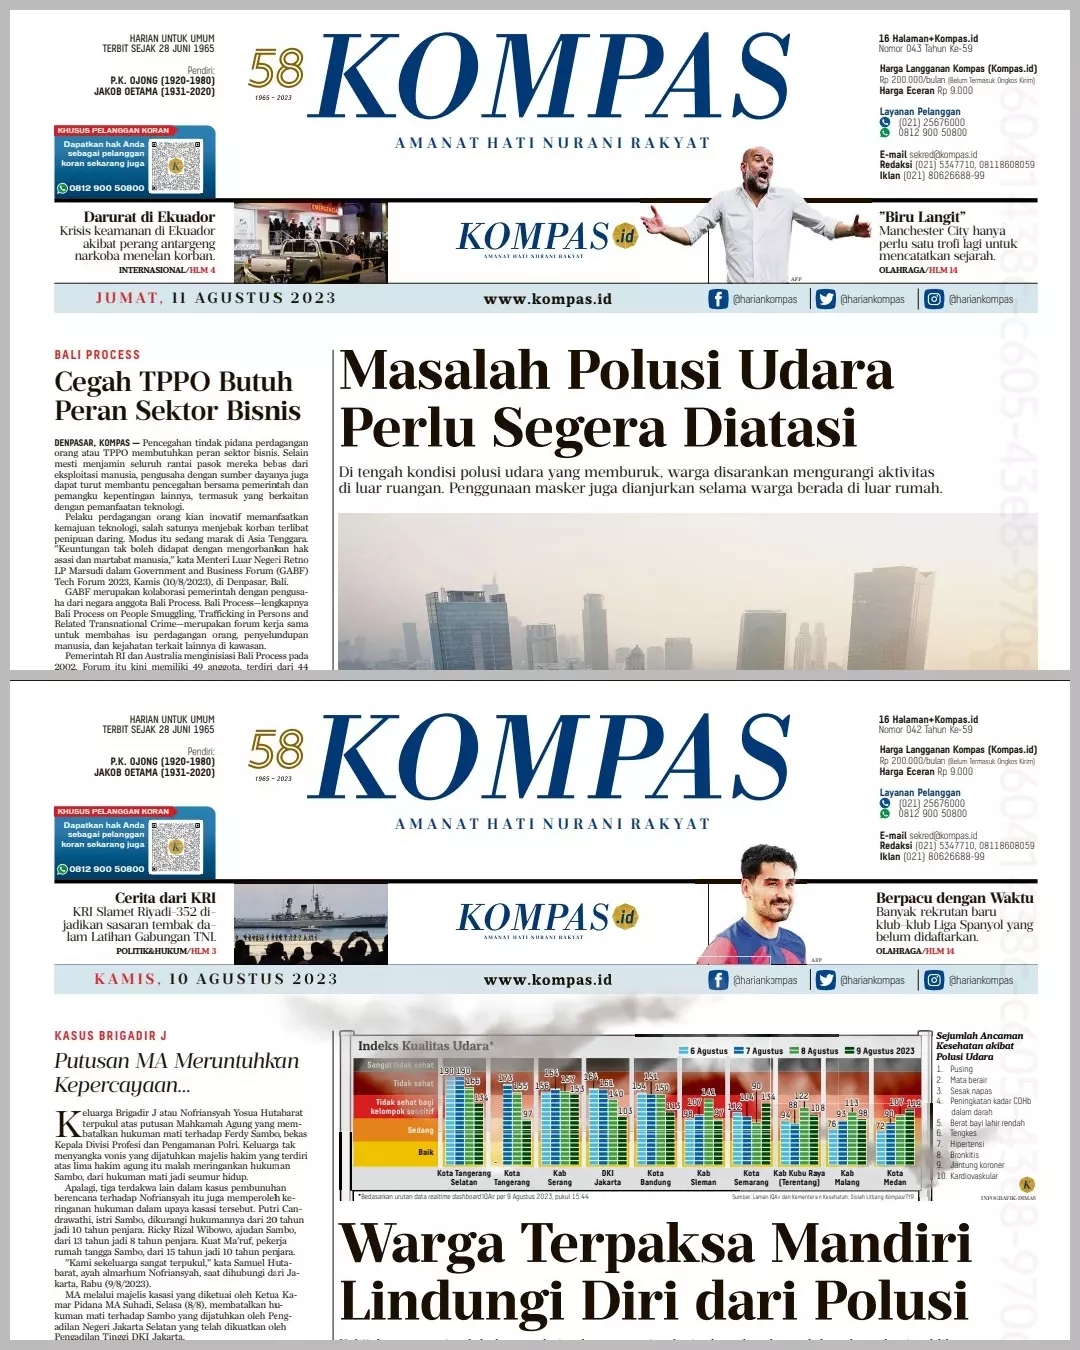 Liputan Kompas.id tentang kualitas udara Jakarta 